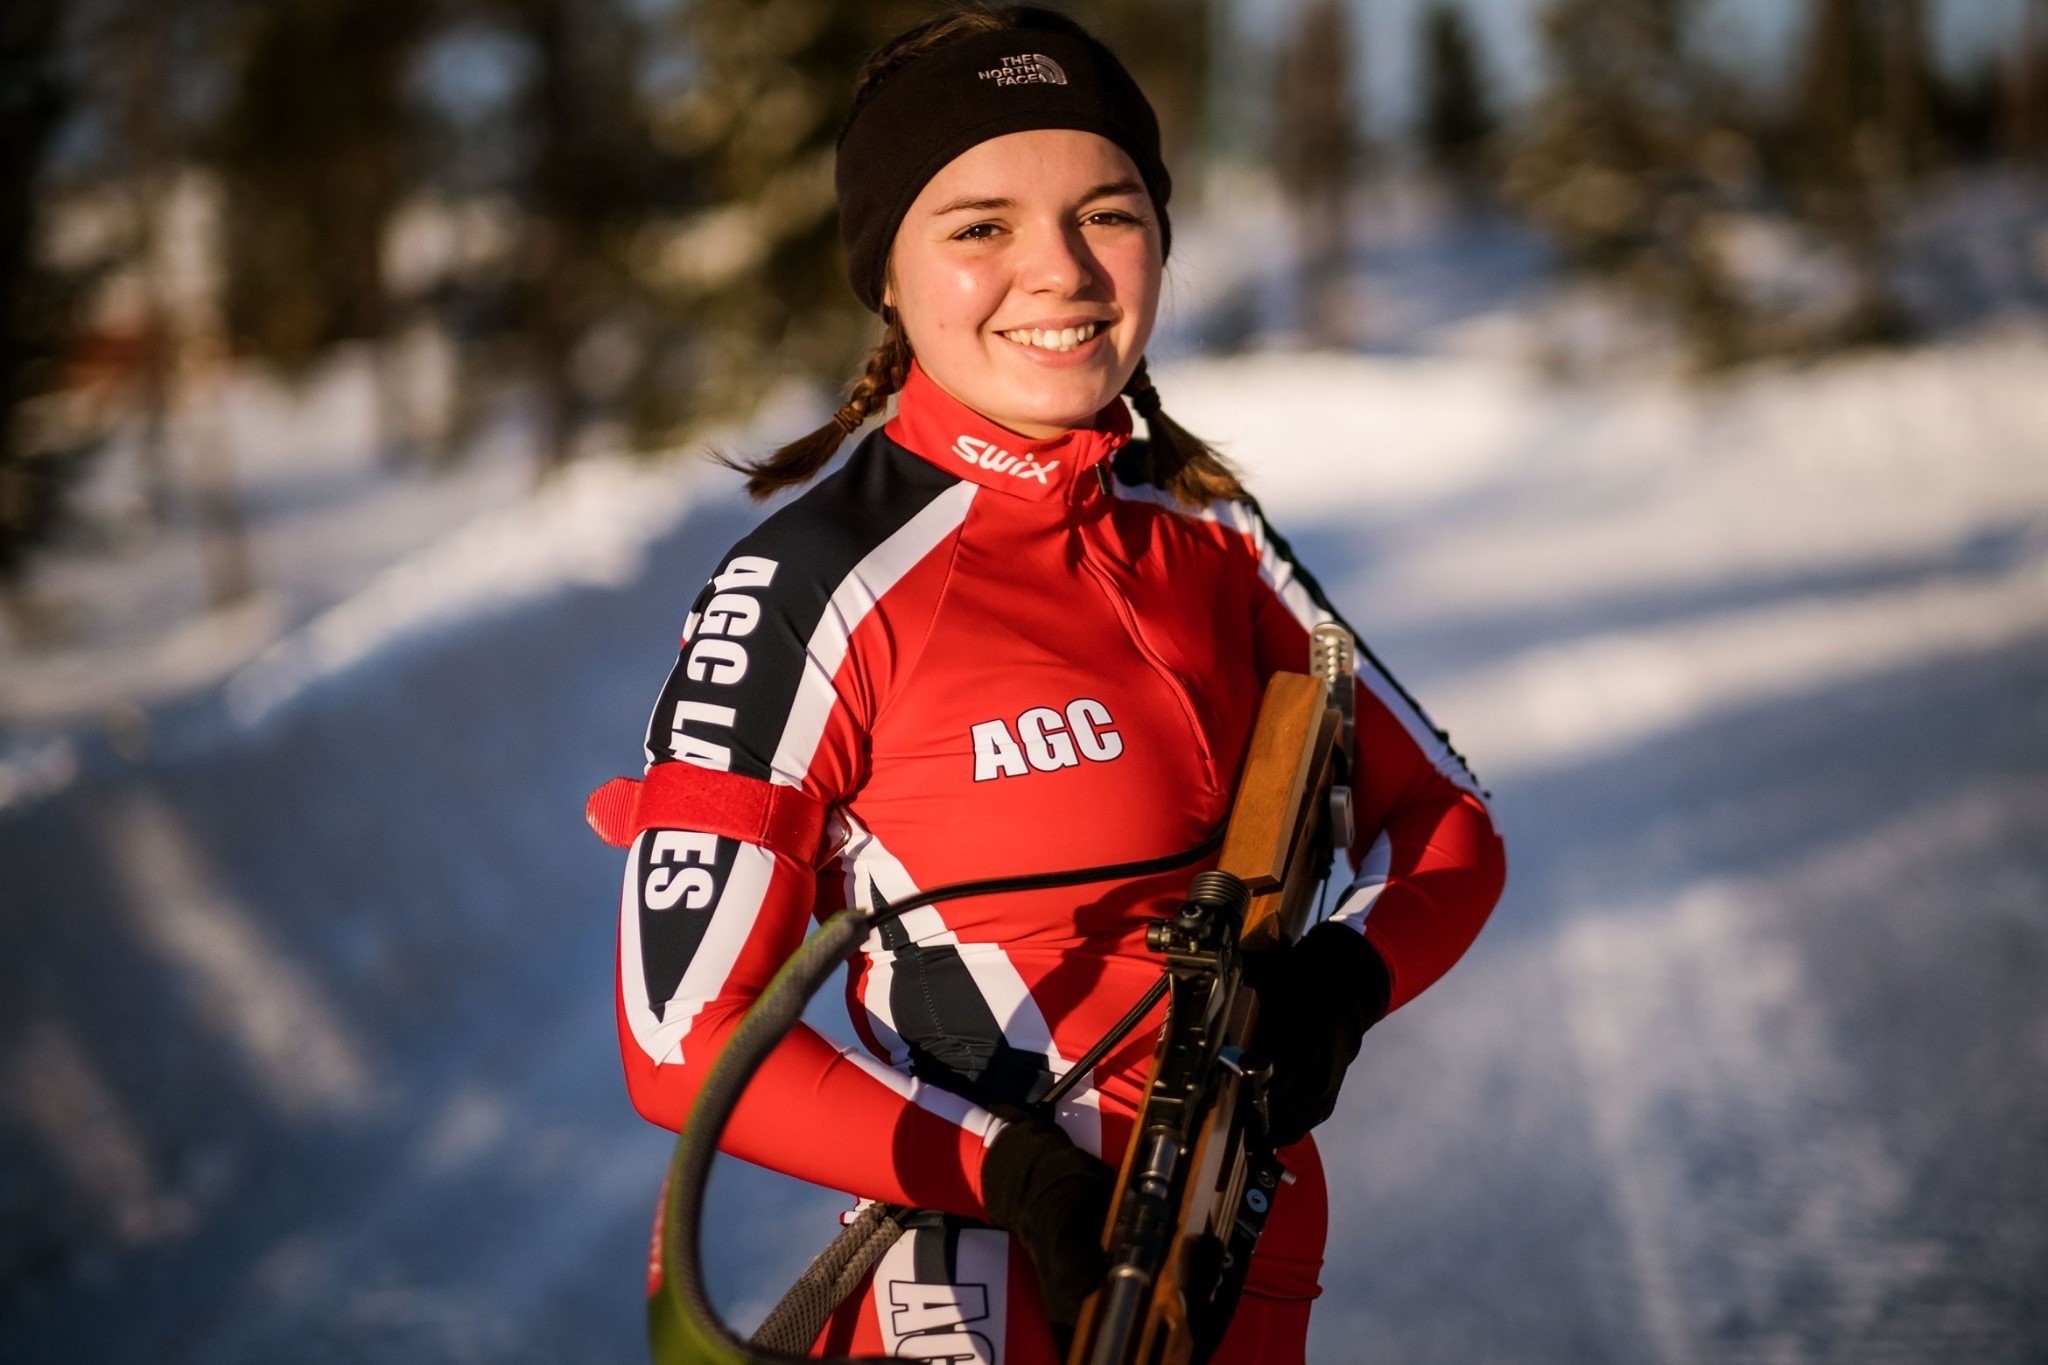 Eden wearing pentathlon gear with ski suit and rifle.